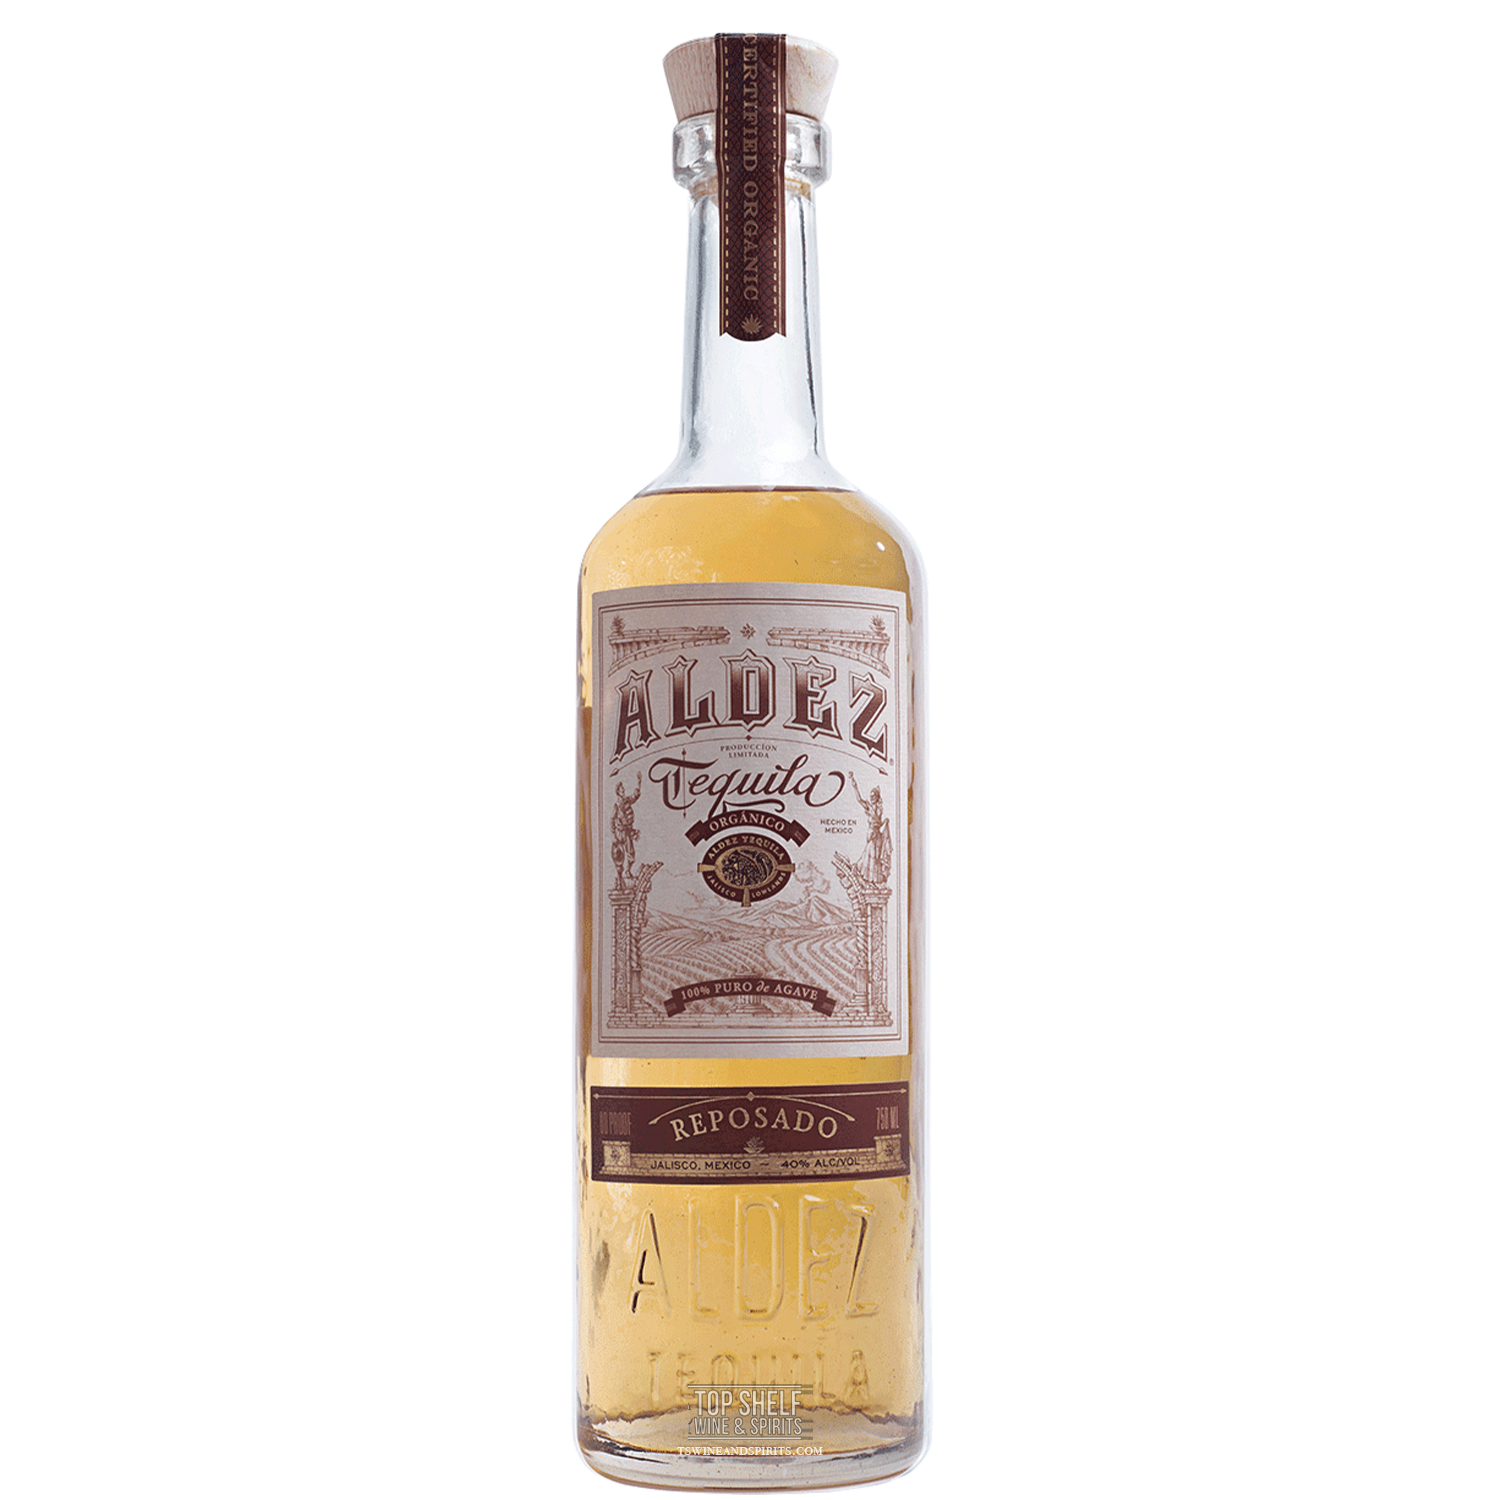 Aldez Organic Reposado Tequila